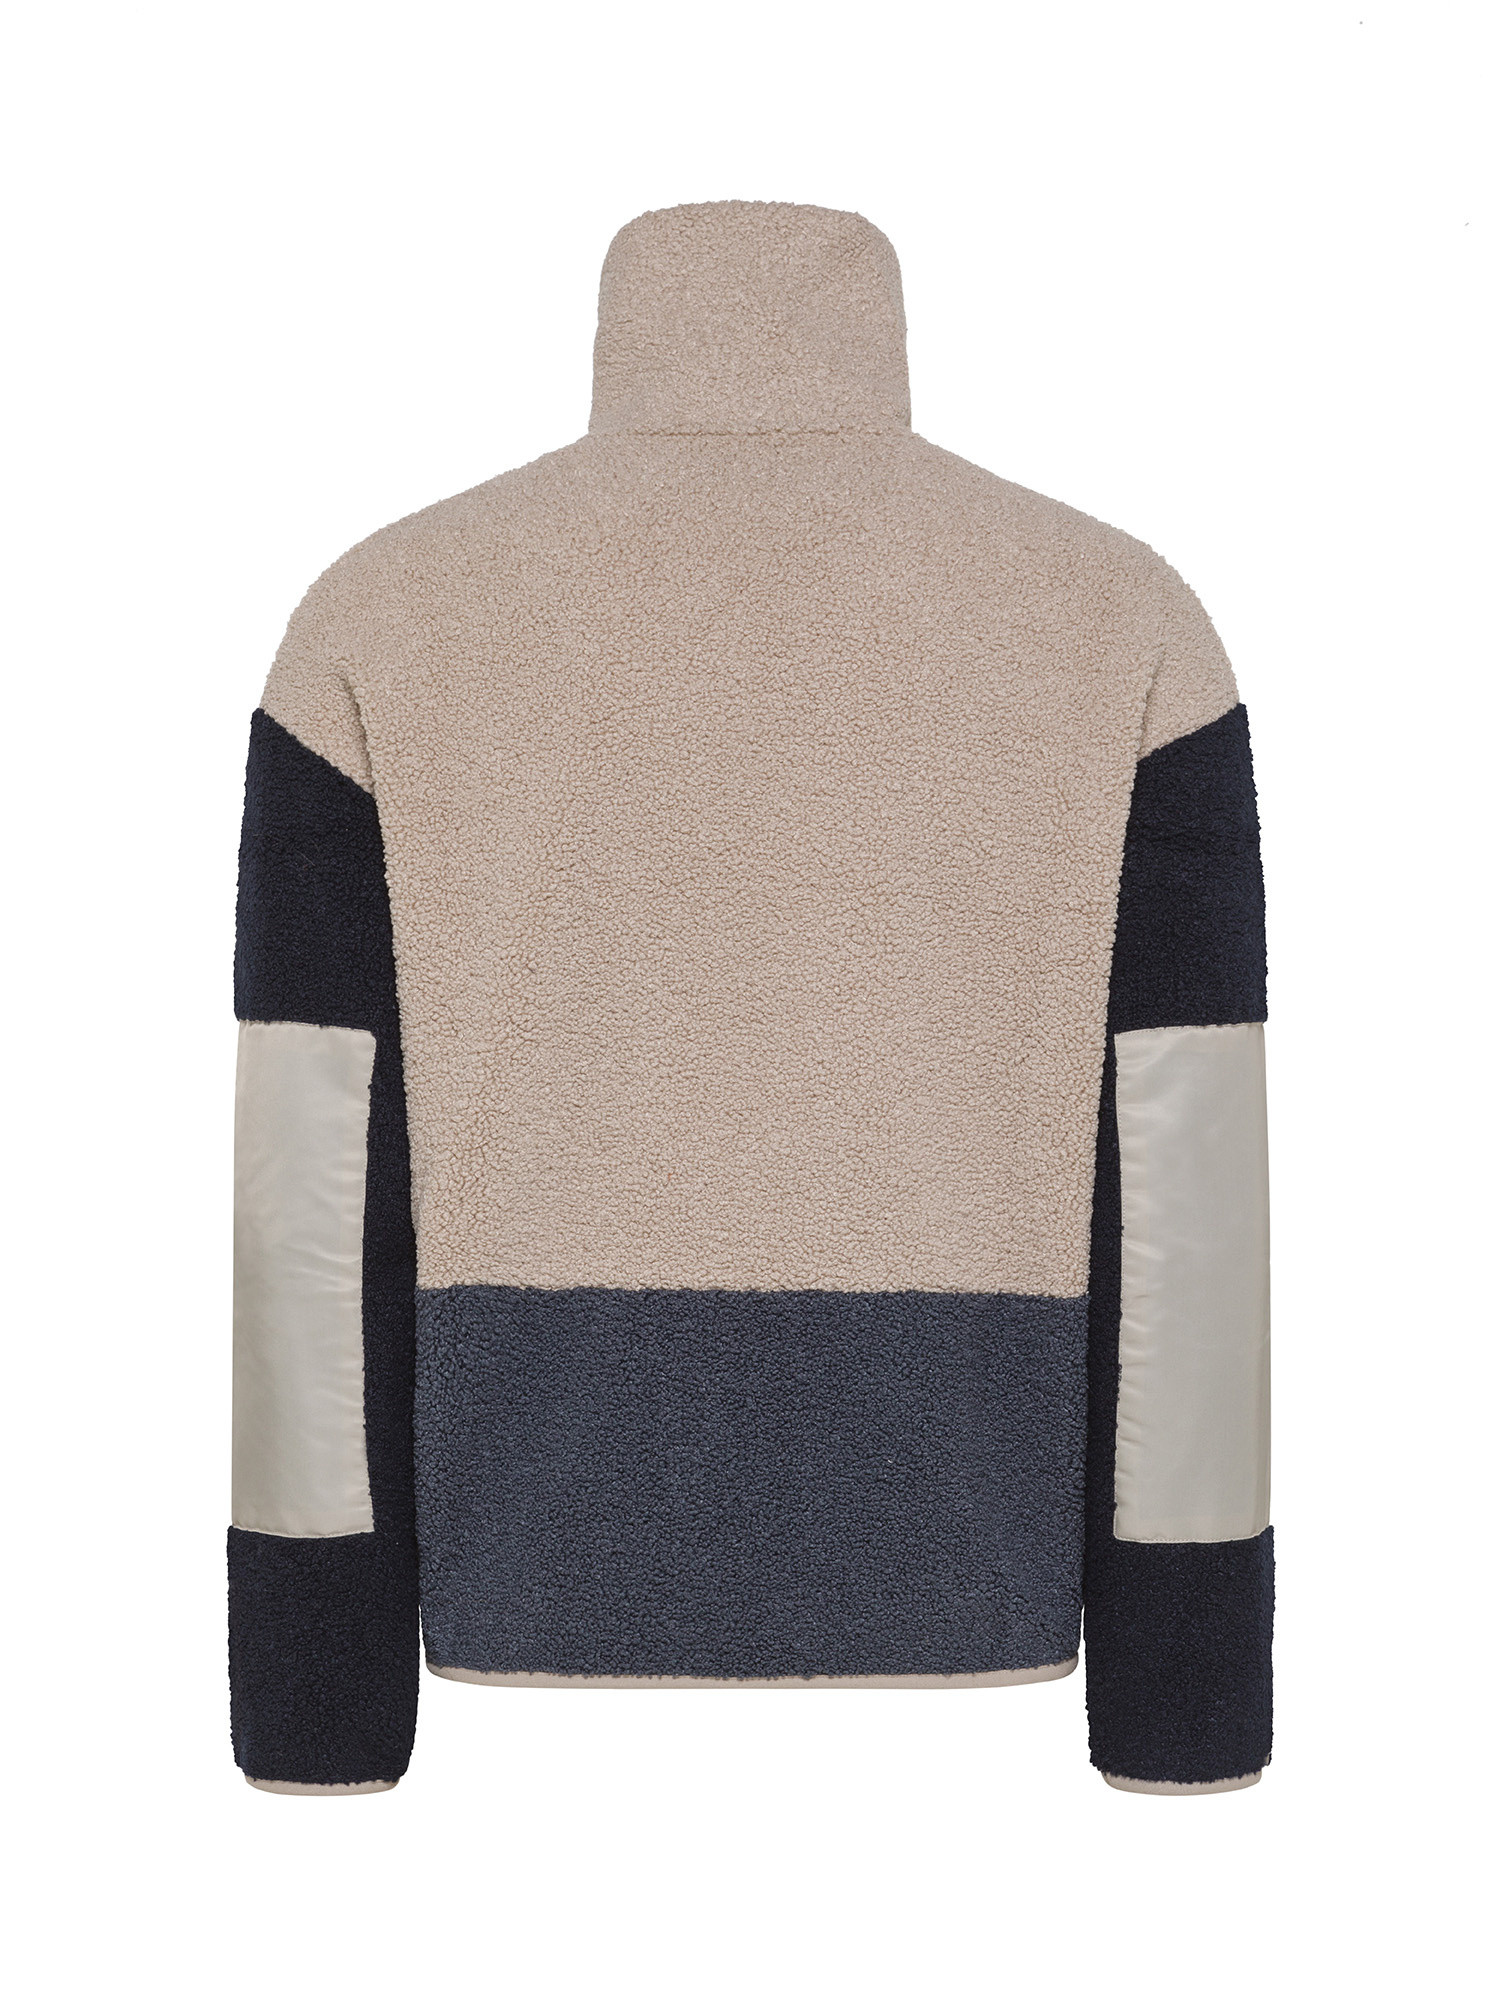 Armani Exchange - Patchwork sweatshirt, Multicolor, large image number 1